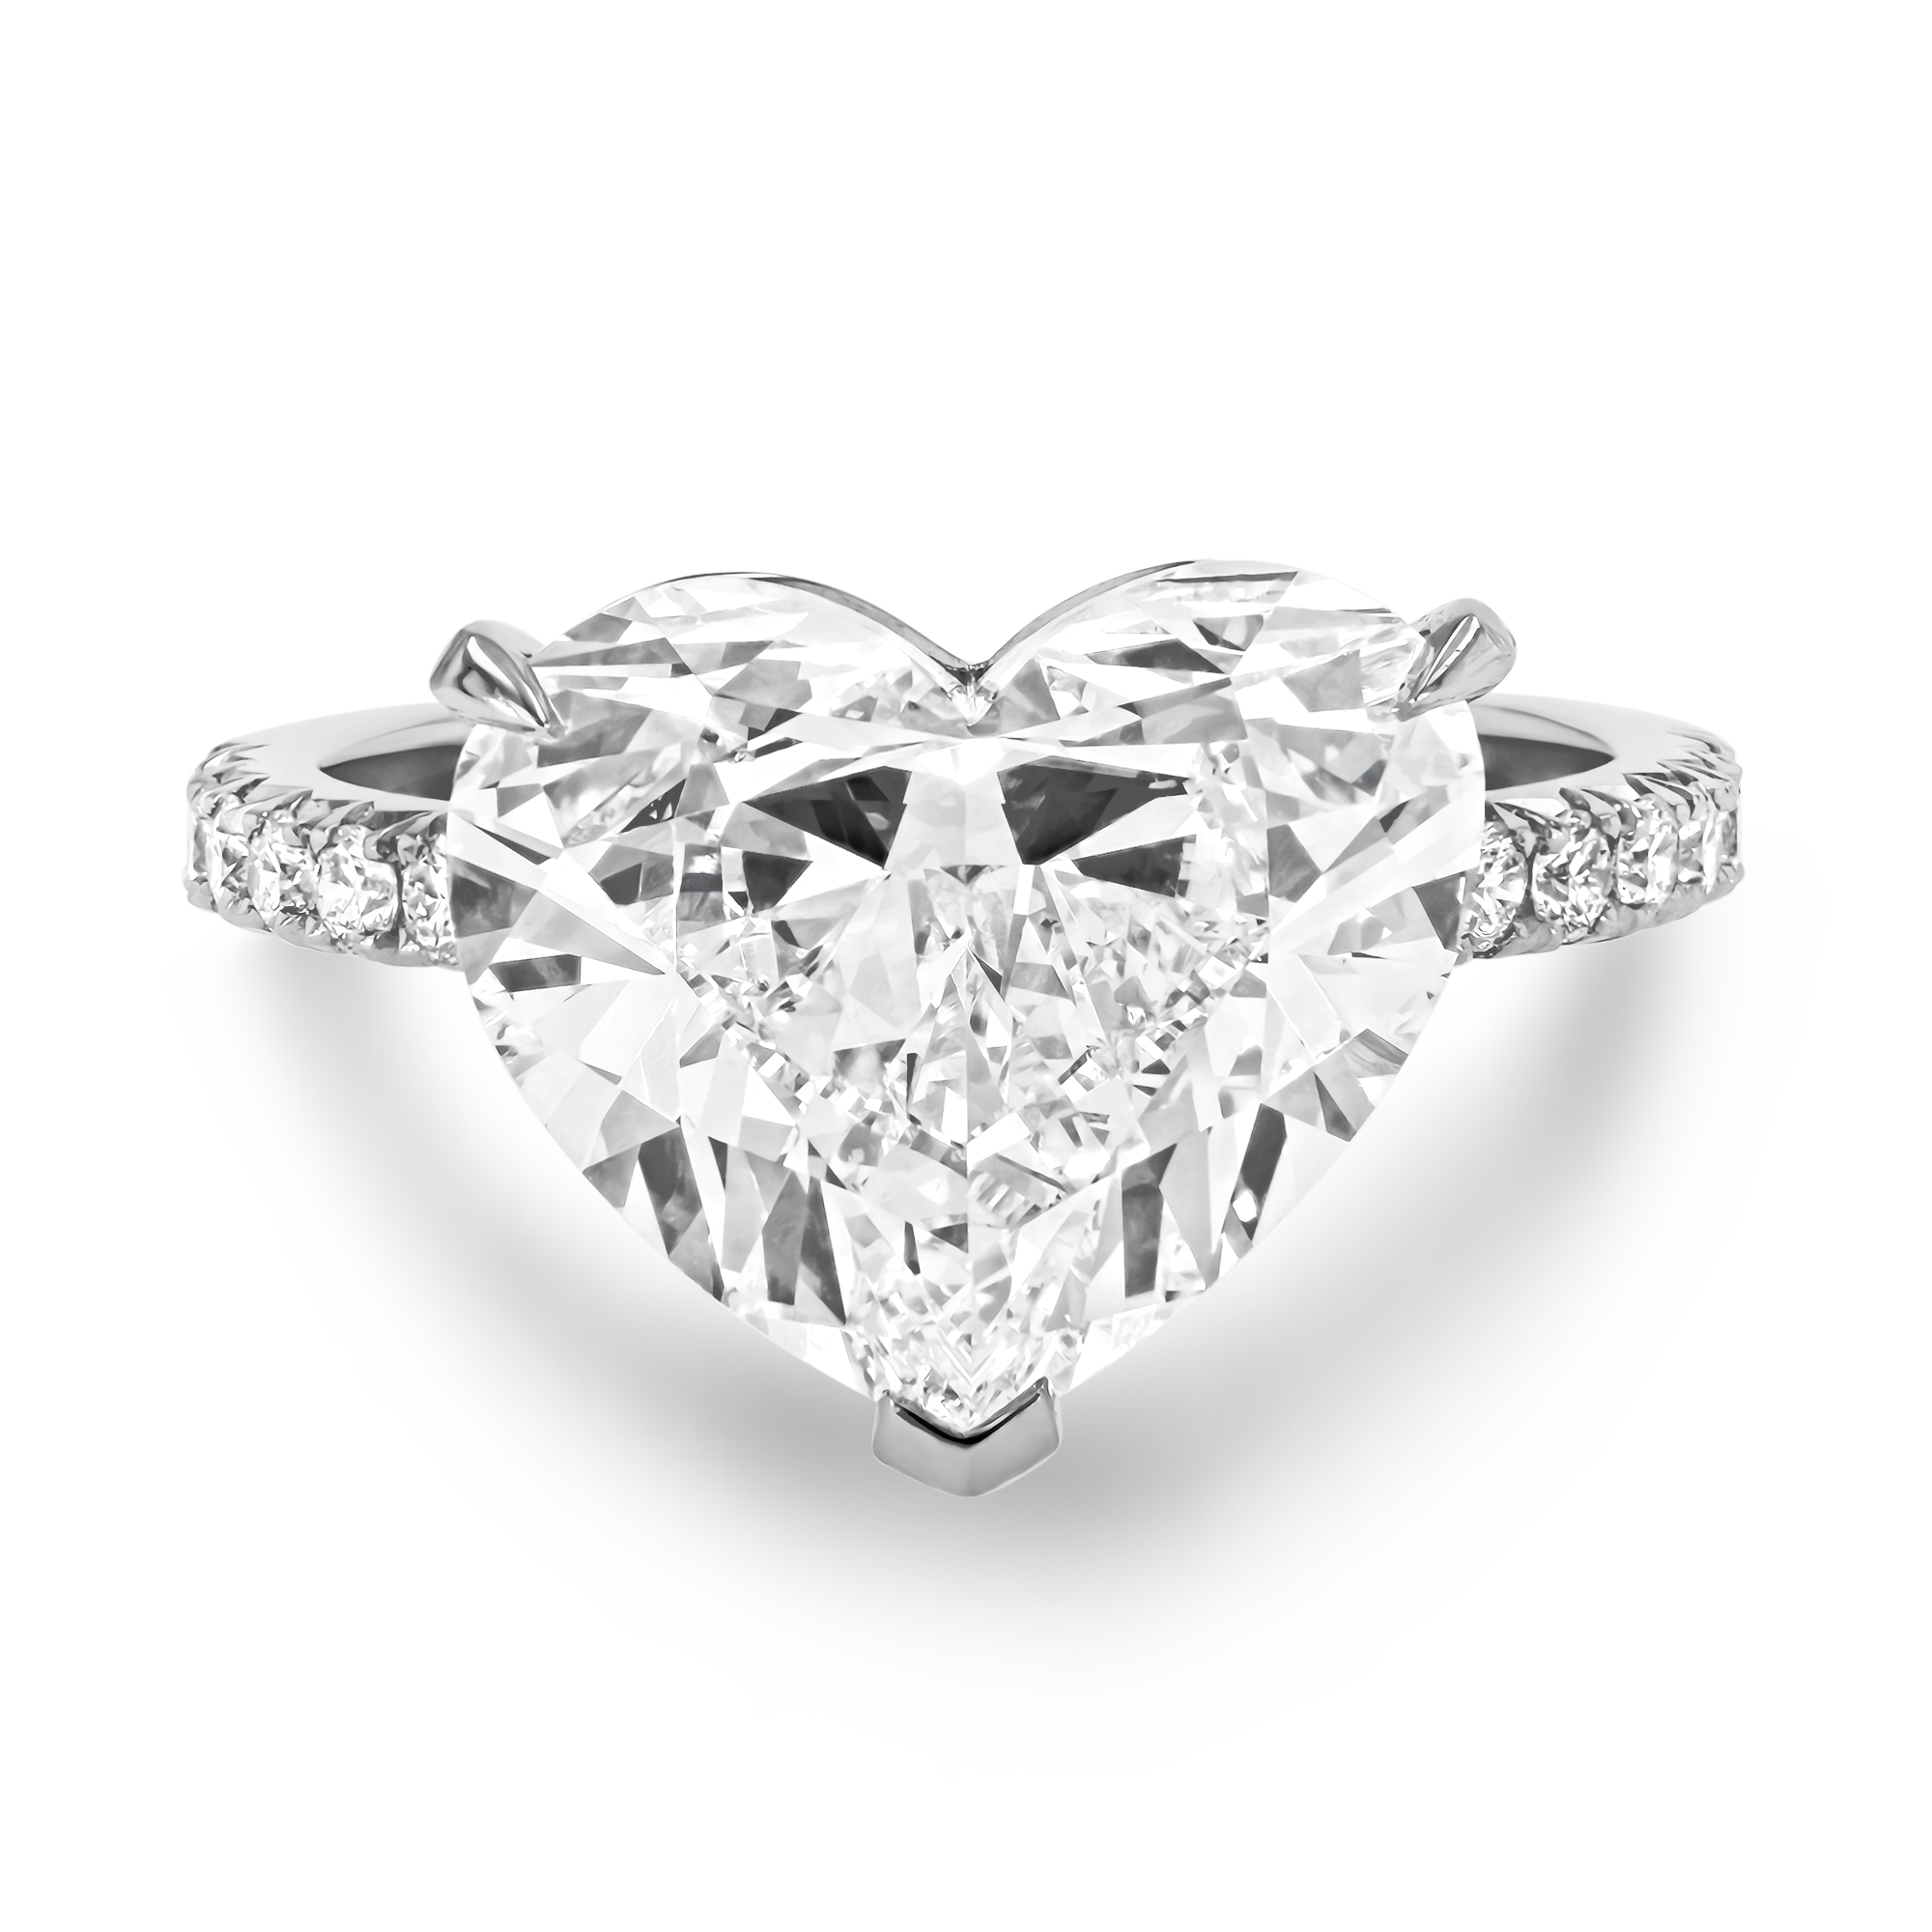 Masterpiece Aurora Setting Colourless Heart Diamond Ring with Diamond Set Shoulders Heart Cut, Claw Set_2